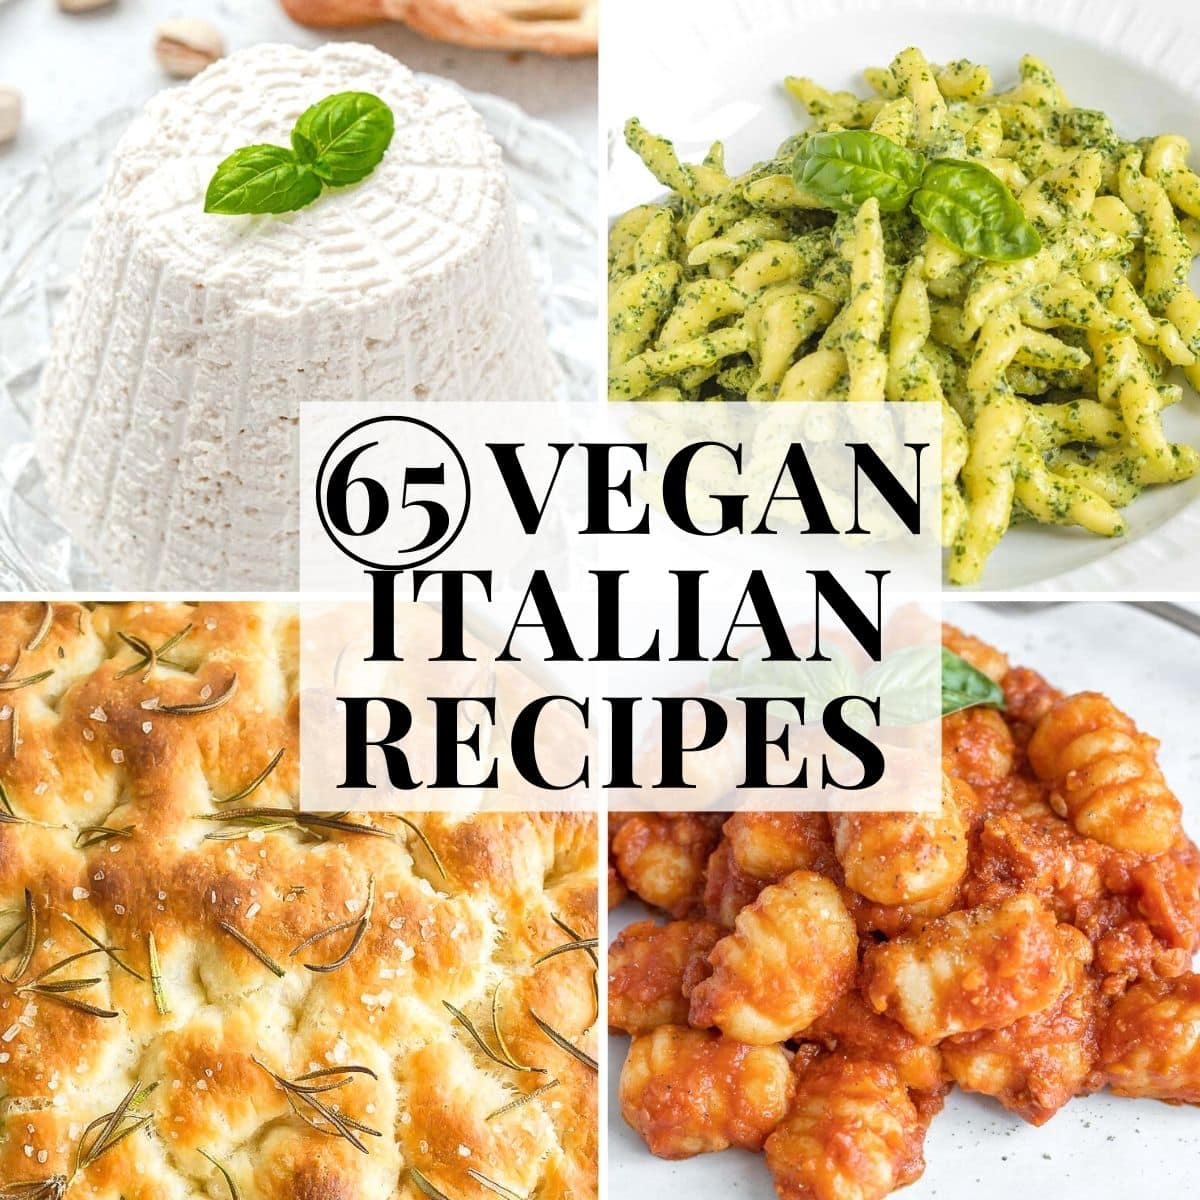 Vegan Italian recipes such as ricotta and focaccia